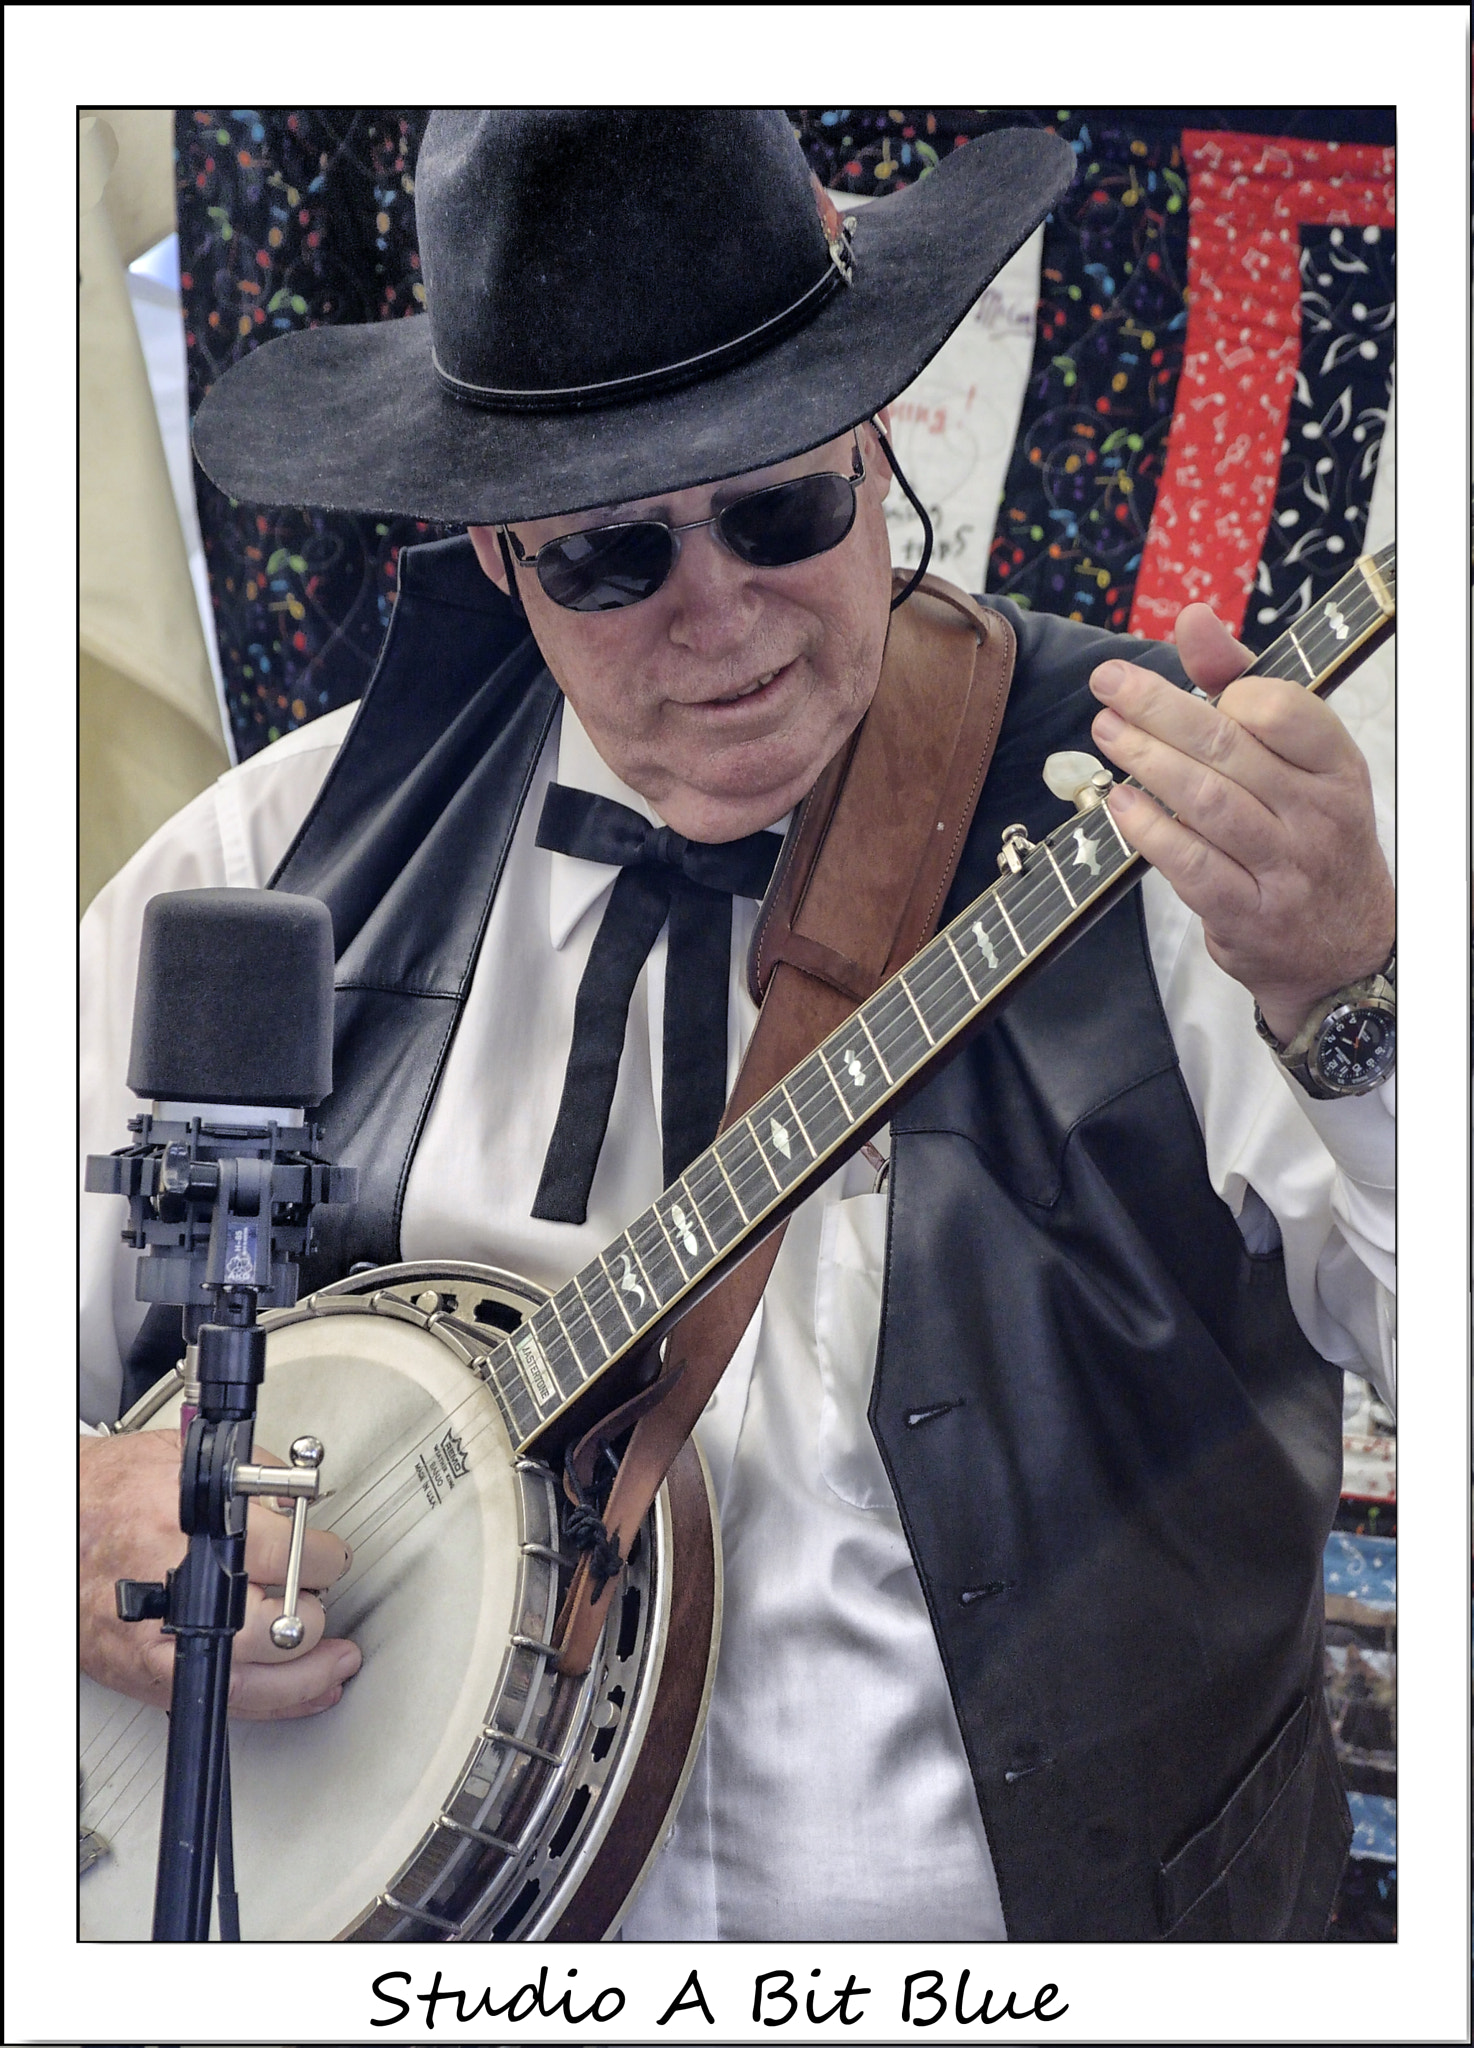 Nikon 1 V2 sample photo. The banjo player photography